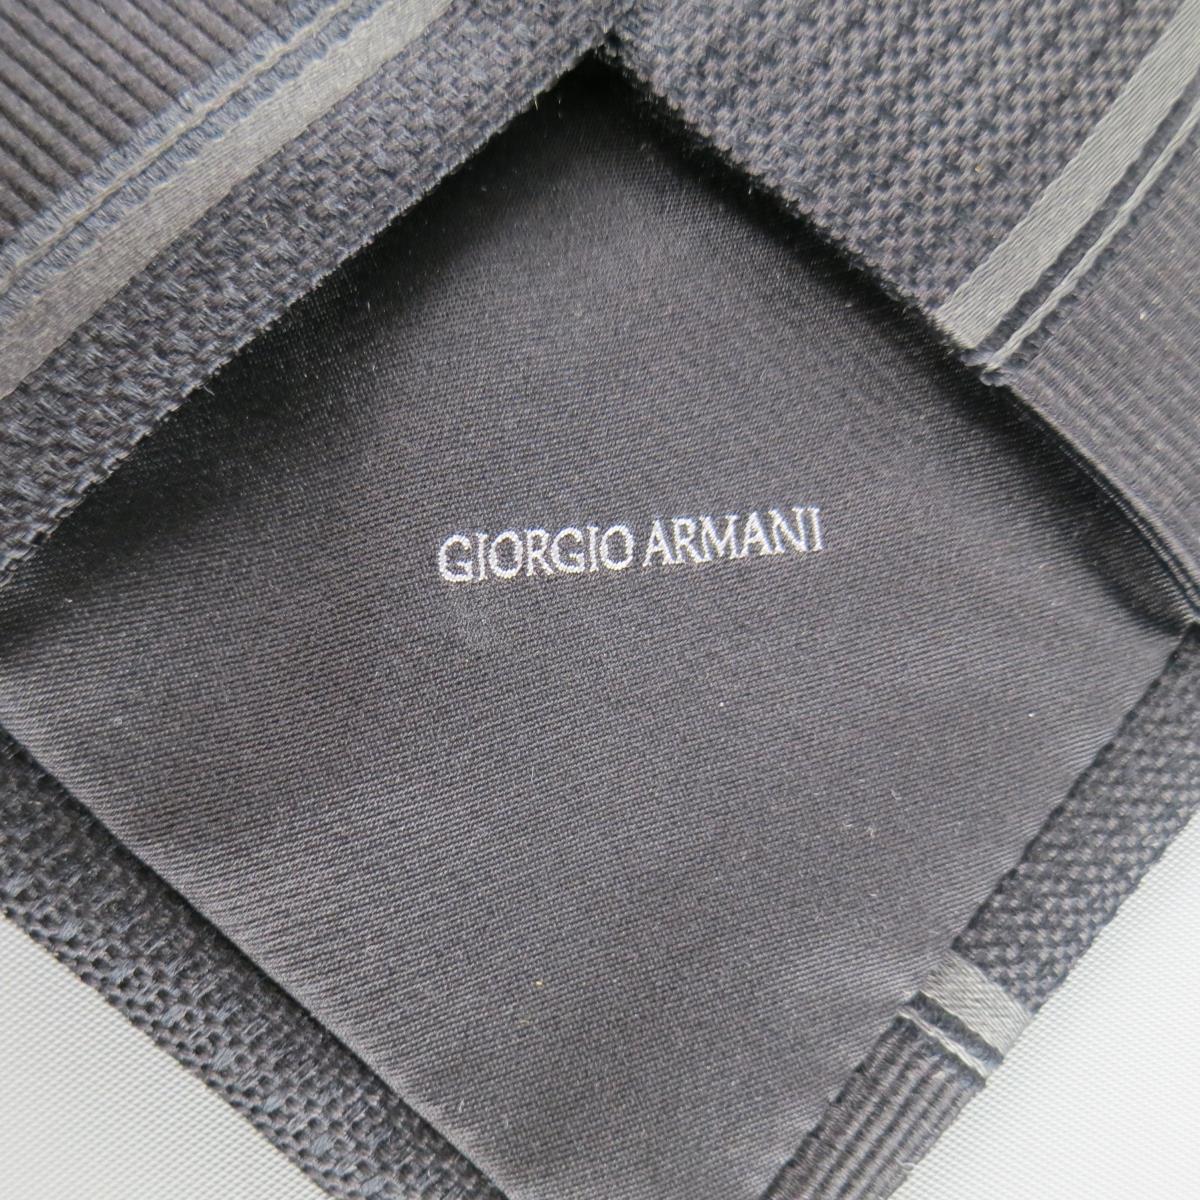 GIORGIO ARMANI Black on Black Diagonal Striped Silk Tie